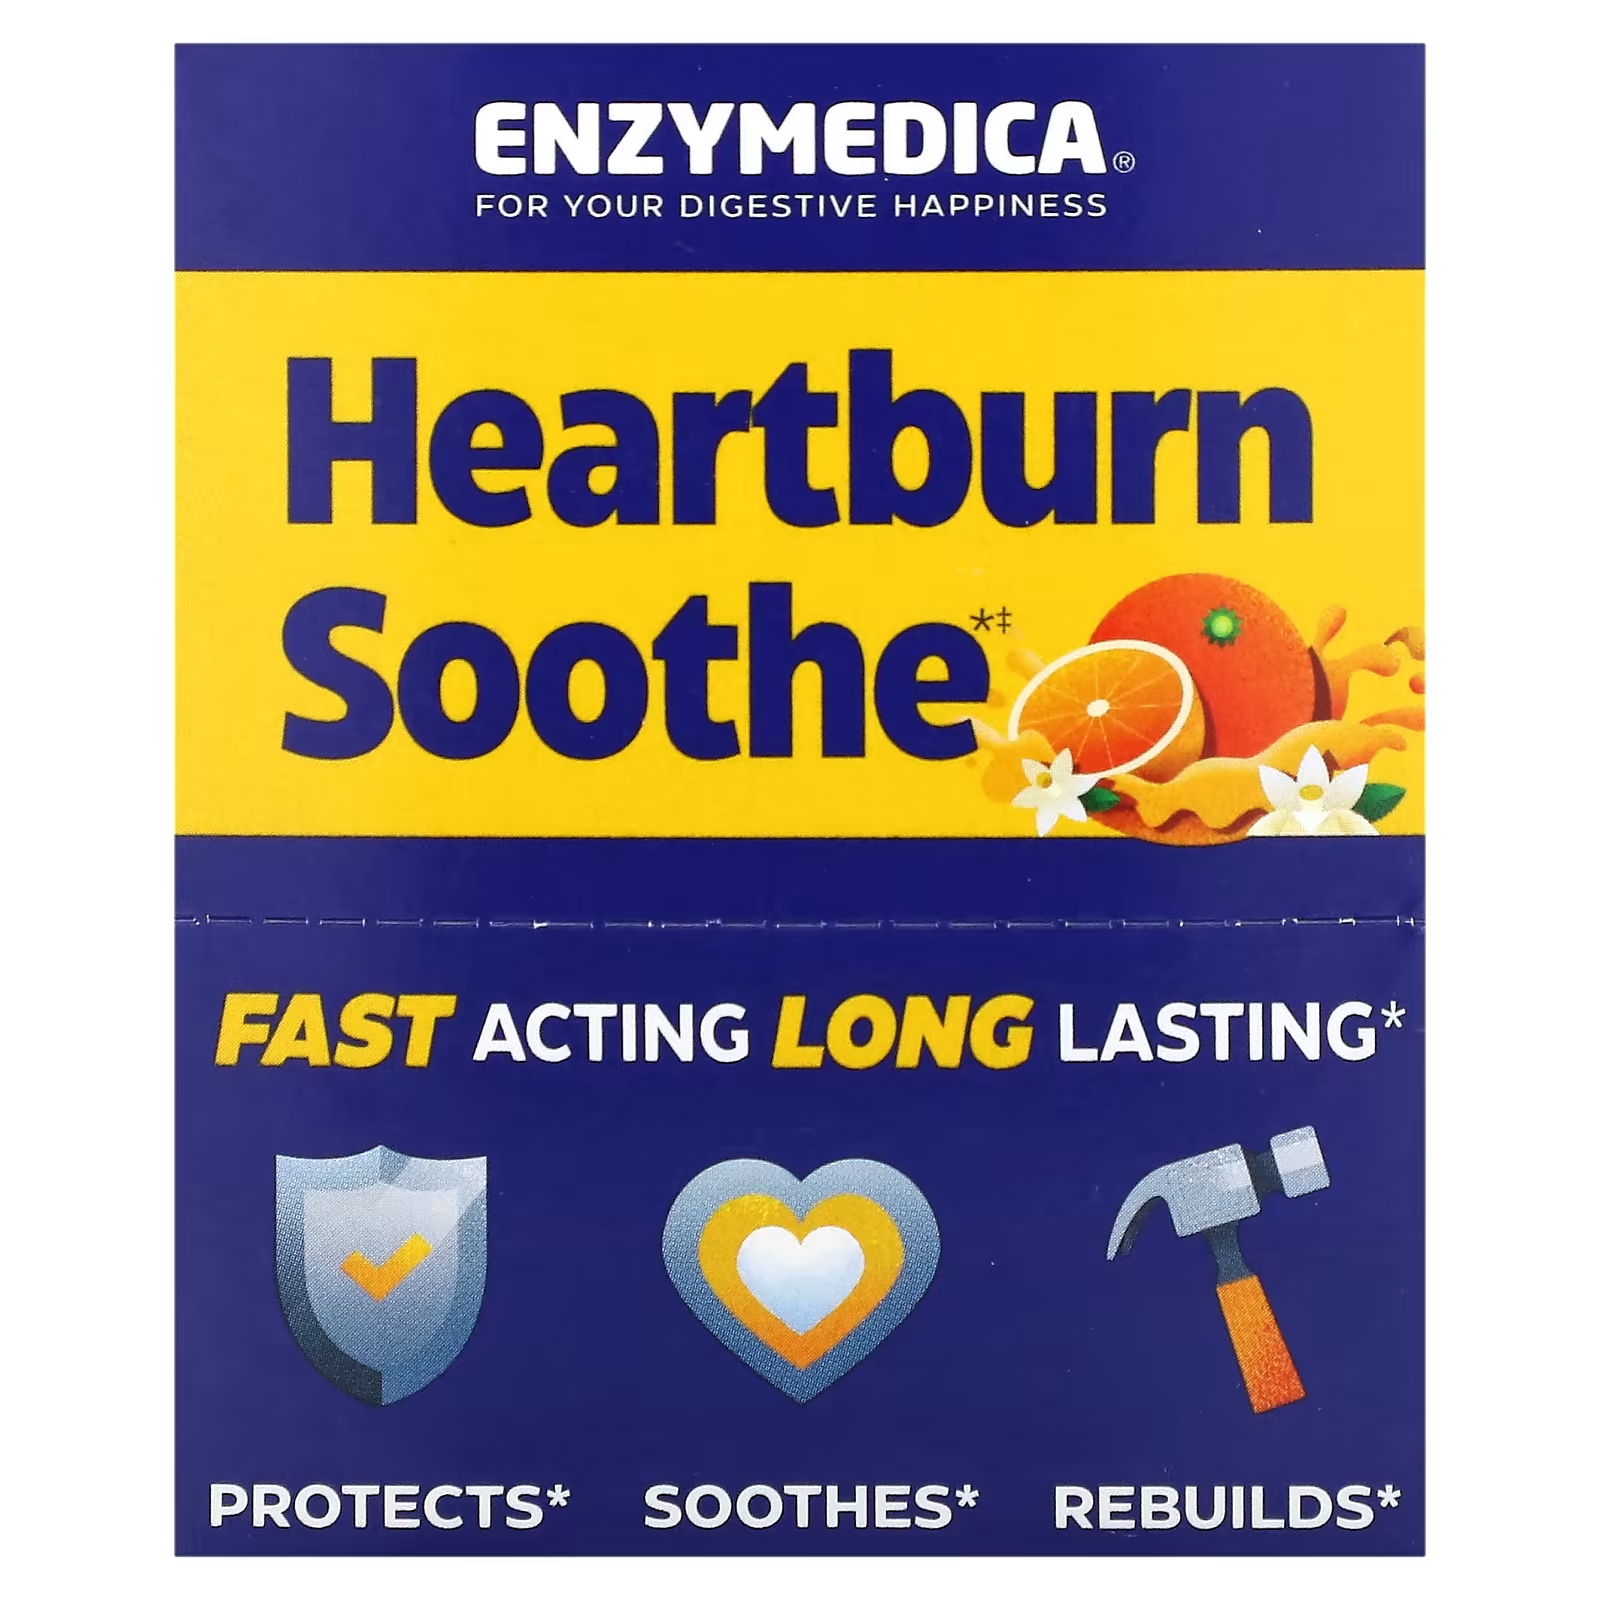 ephron nora heartburn Средство от изжоги Enzymedica, 6 бутылочек